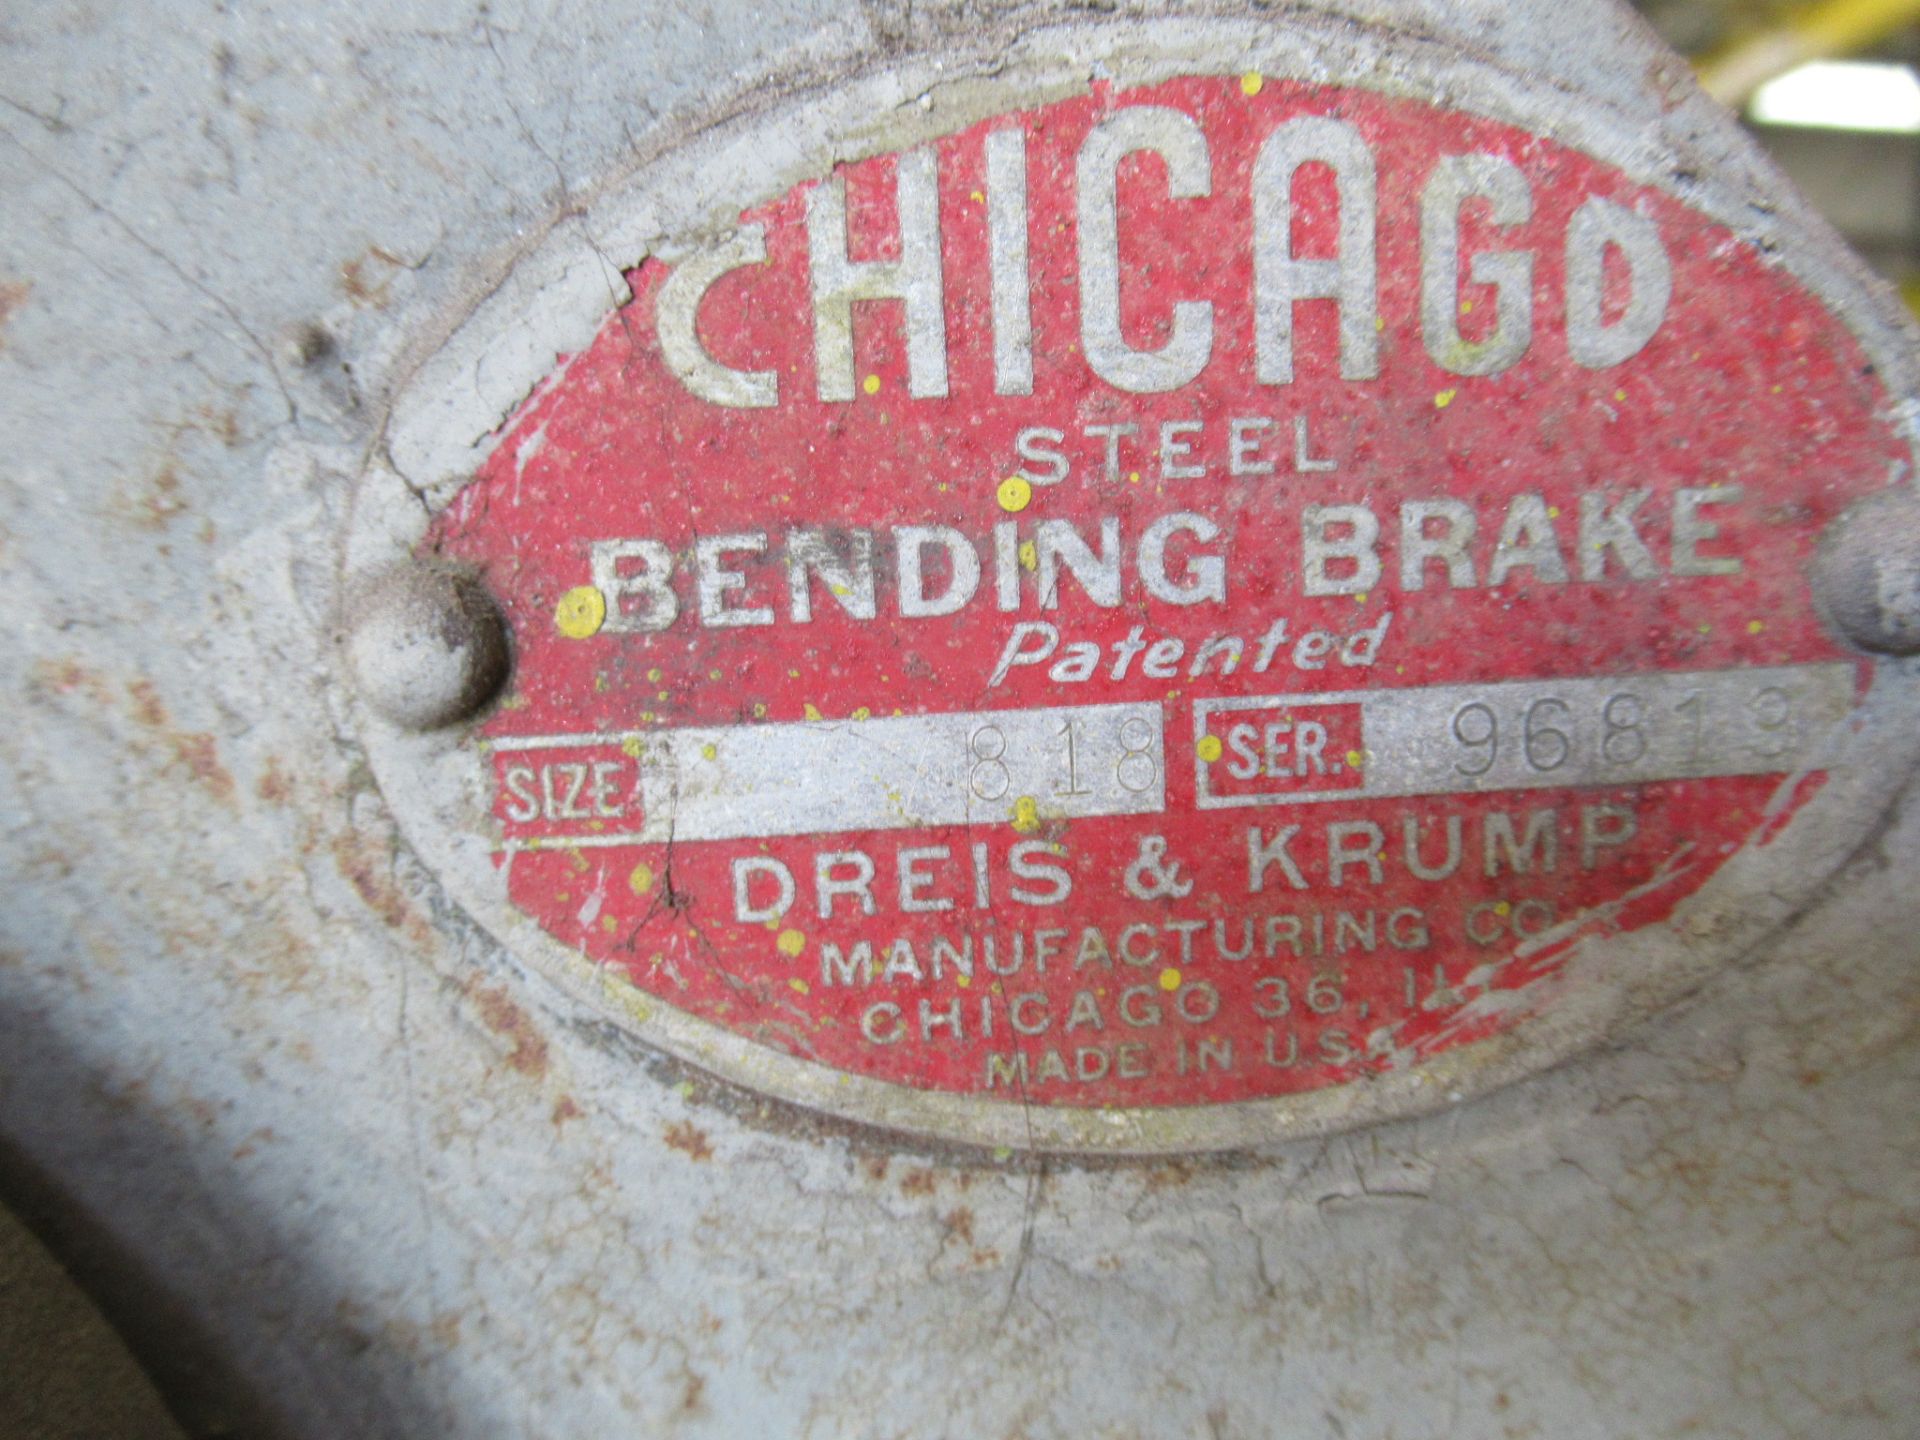 BOX & PAN BRAKE, CHICAGO, MDL. 818, 8' x 18 ga, S/N 96819 (Location 7: McCorvey Industrial - Image 2 of 4